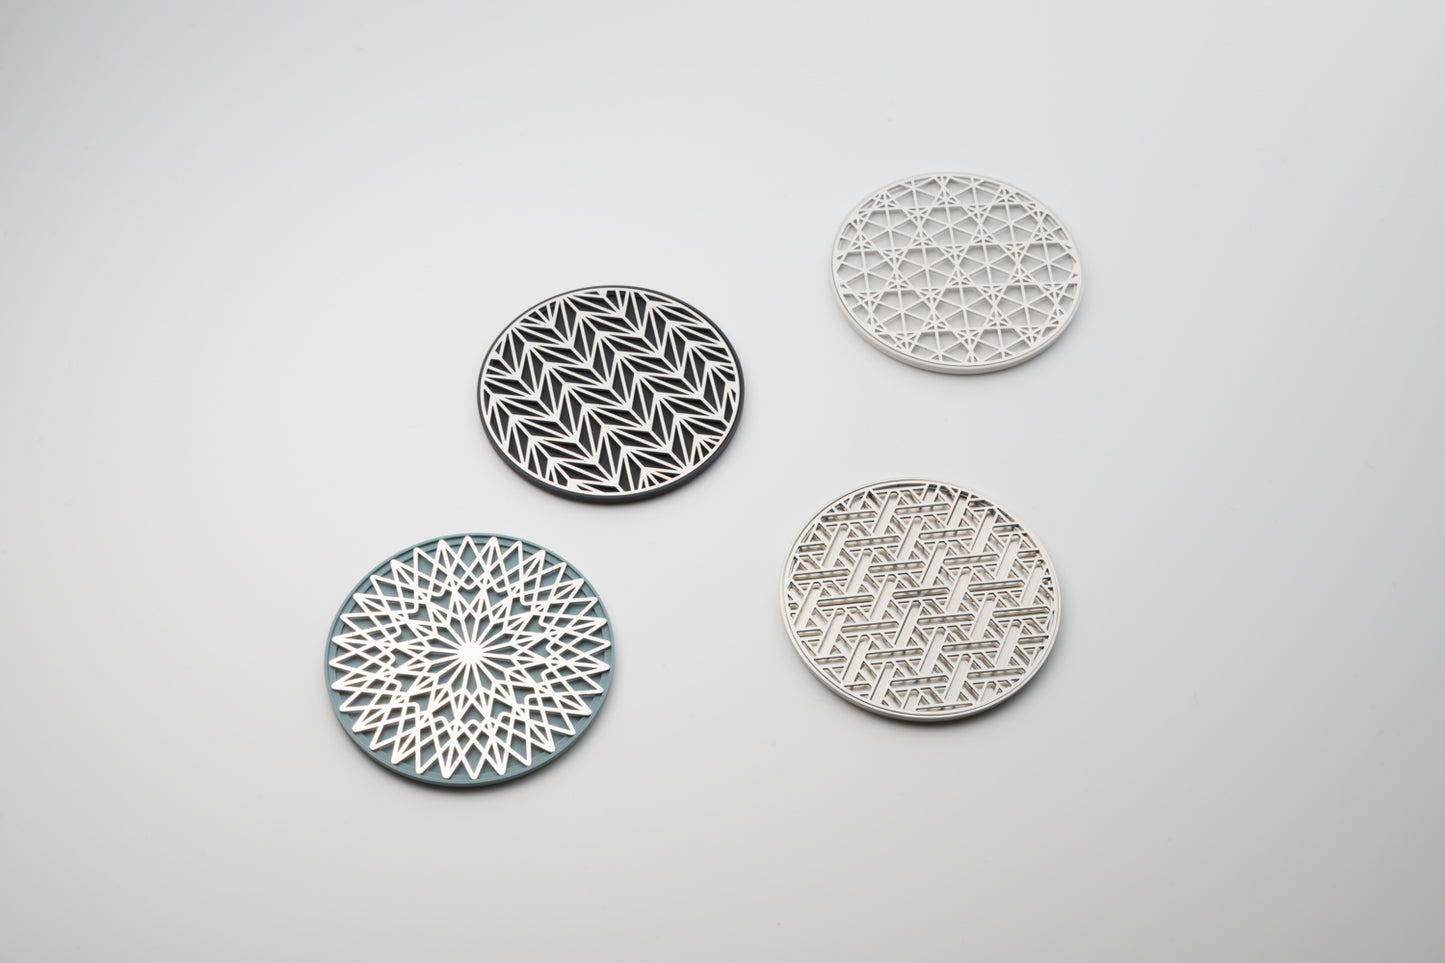 Coasters with kumiko patterns